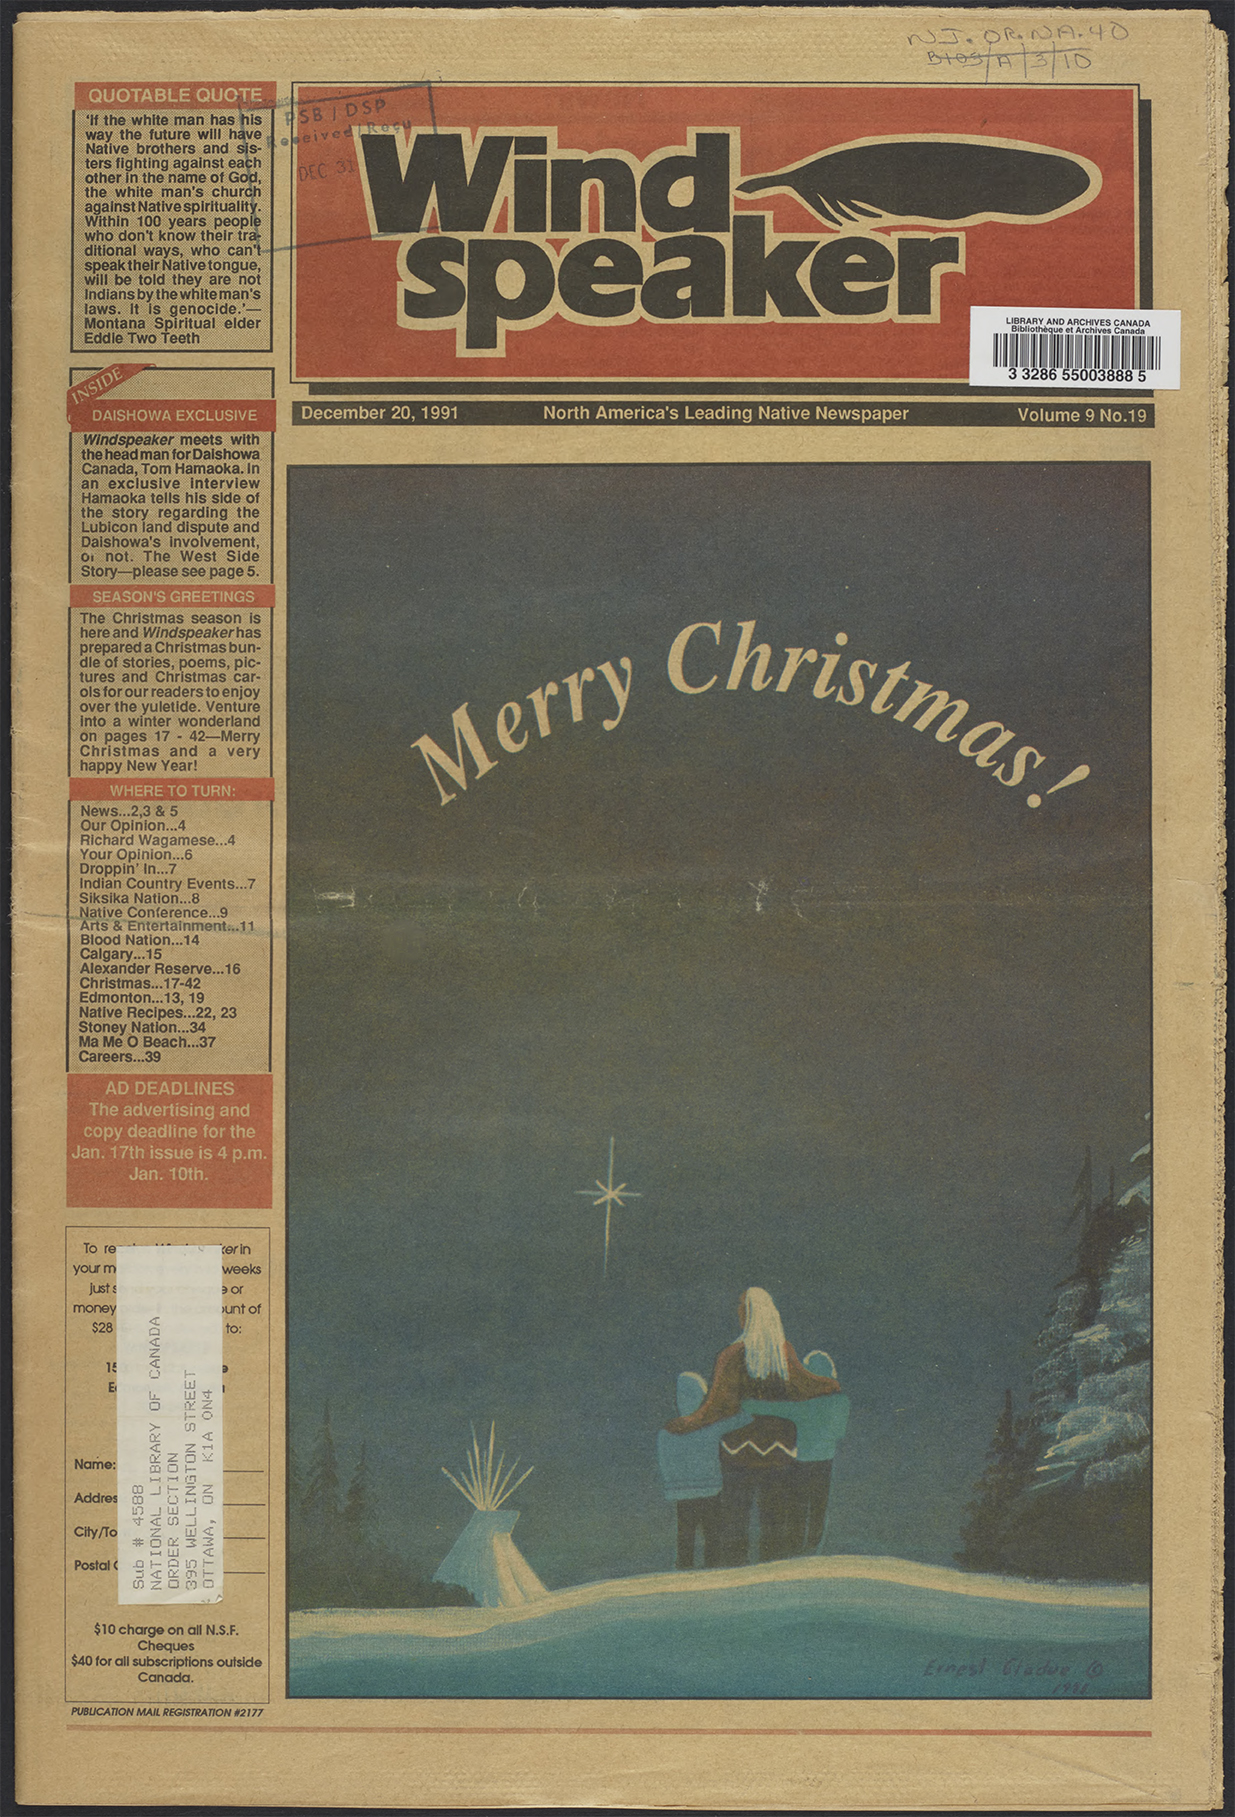 December 20, 1991 